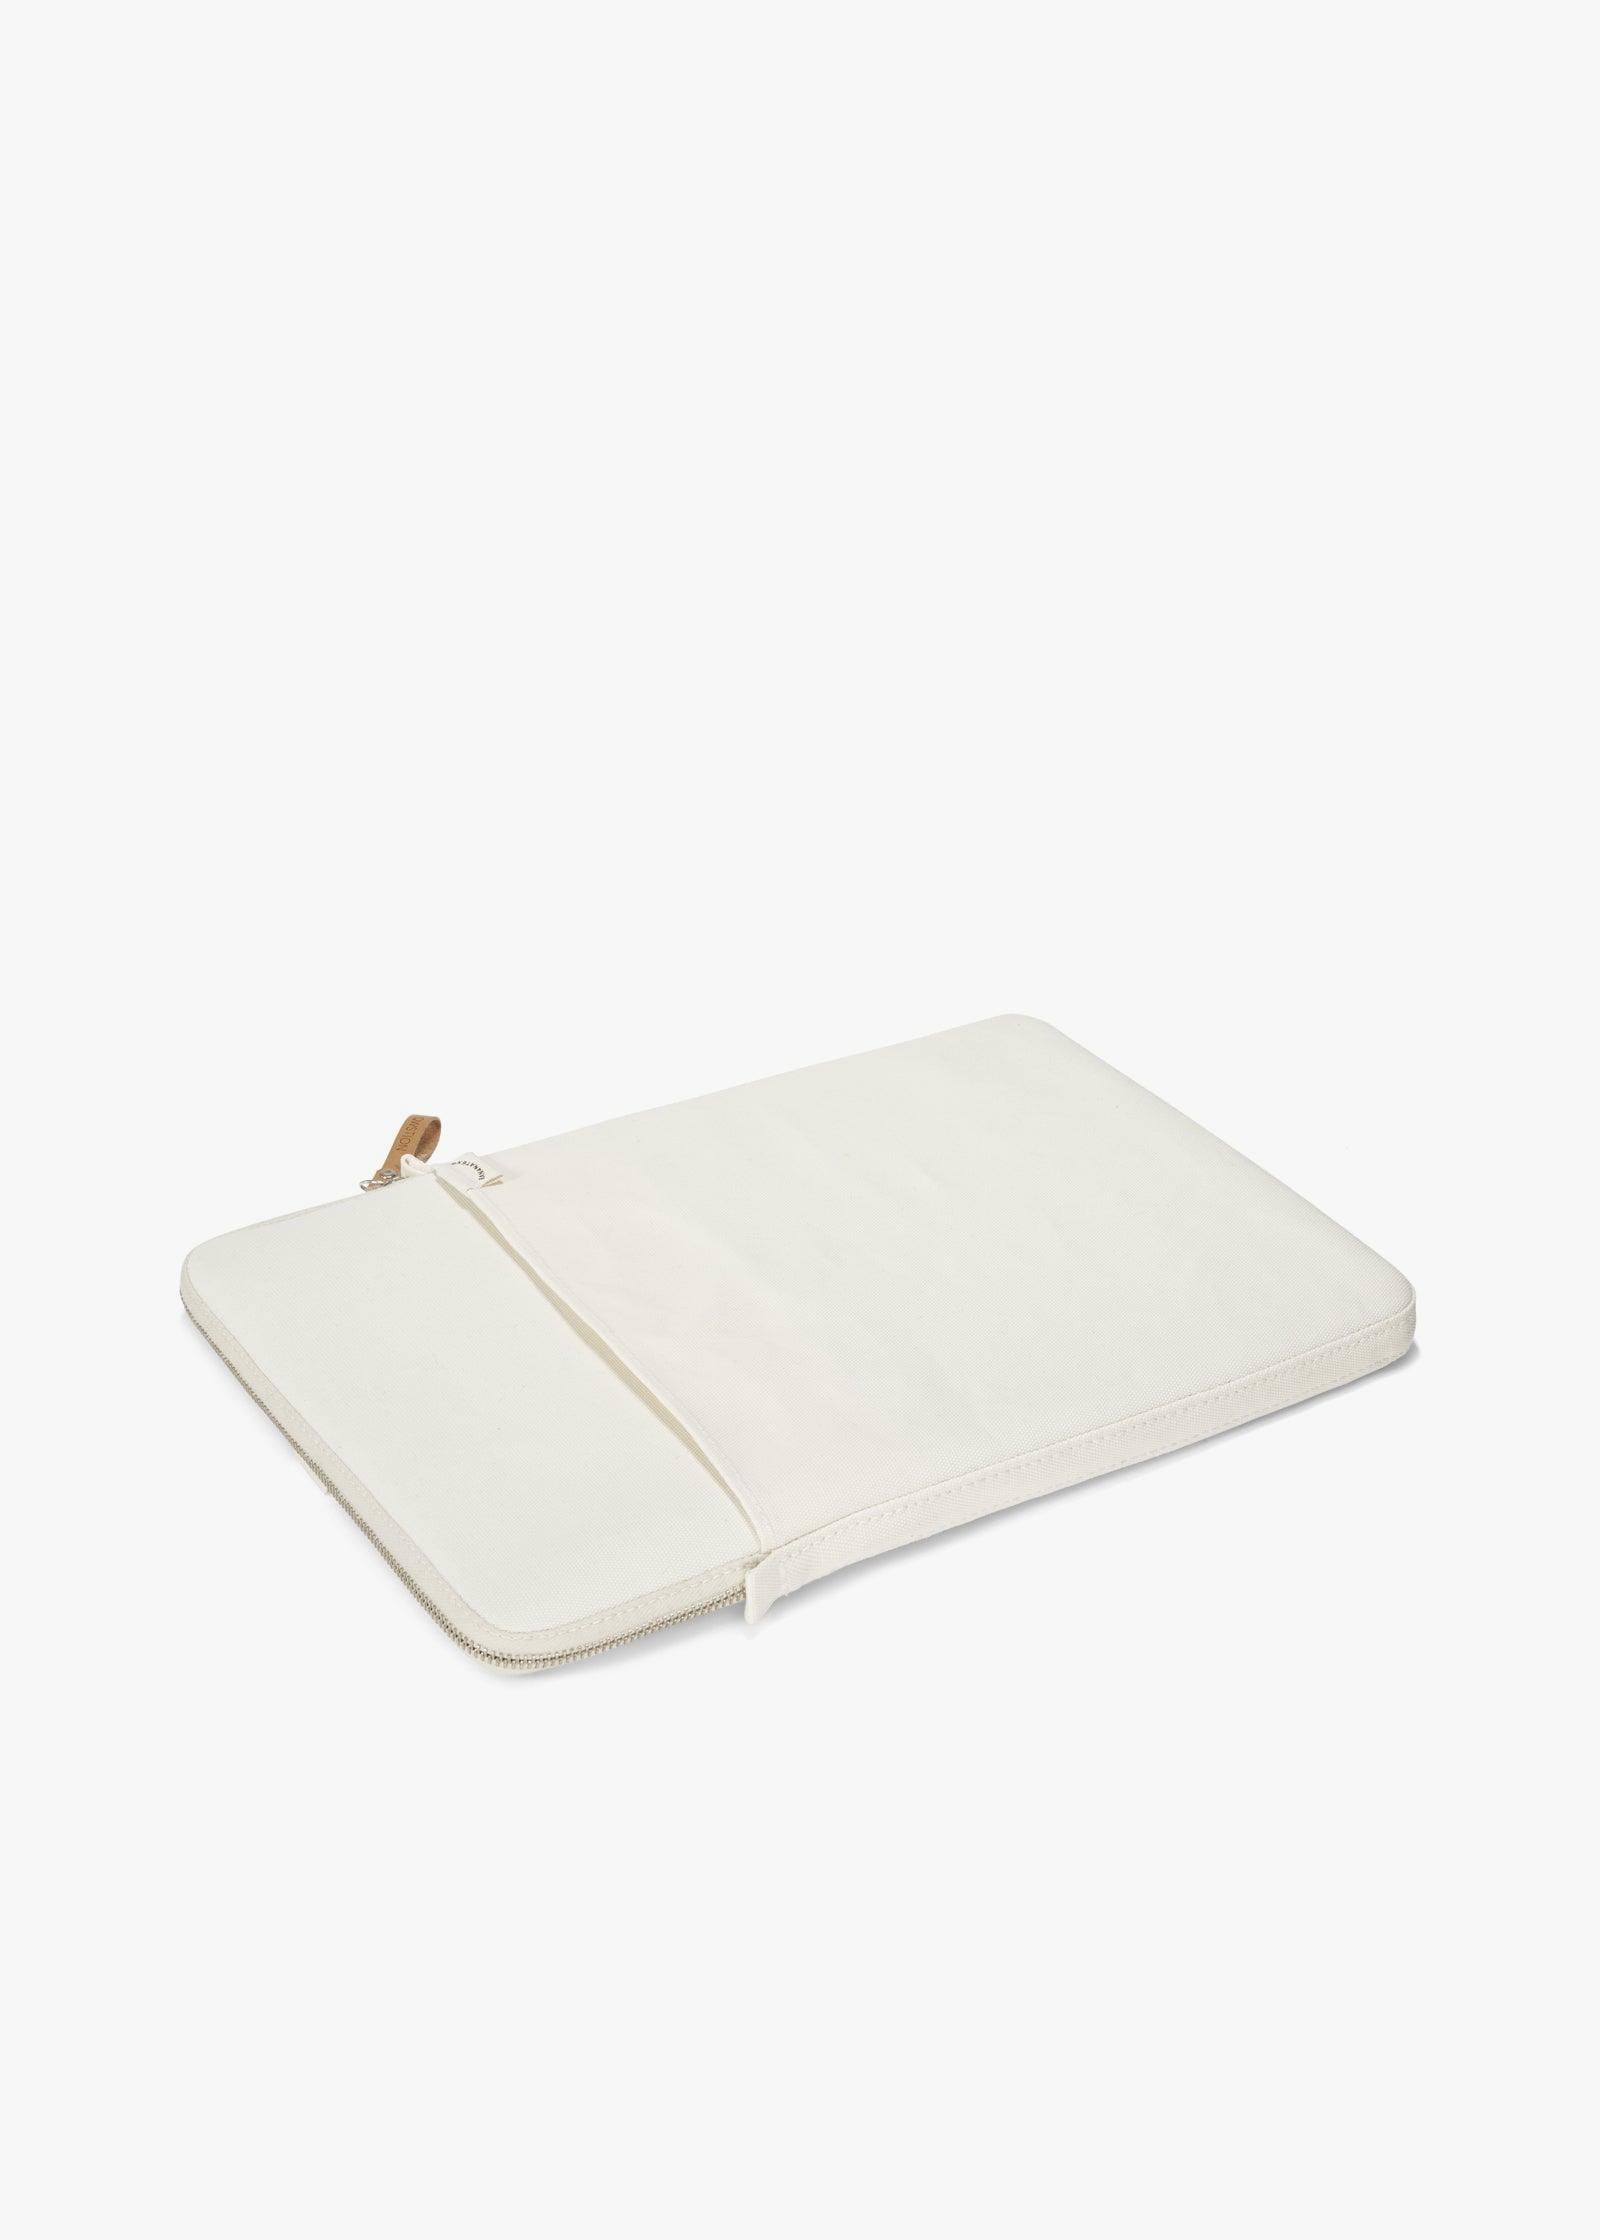 Bananatex Sleeve for Macbook 15" – Natural White